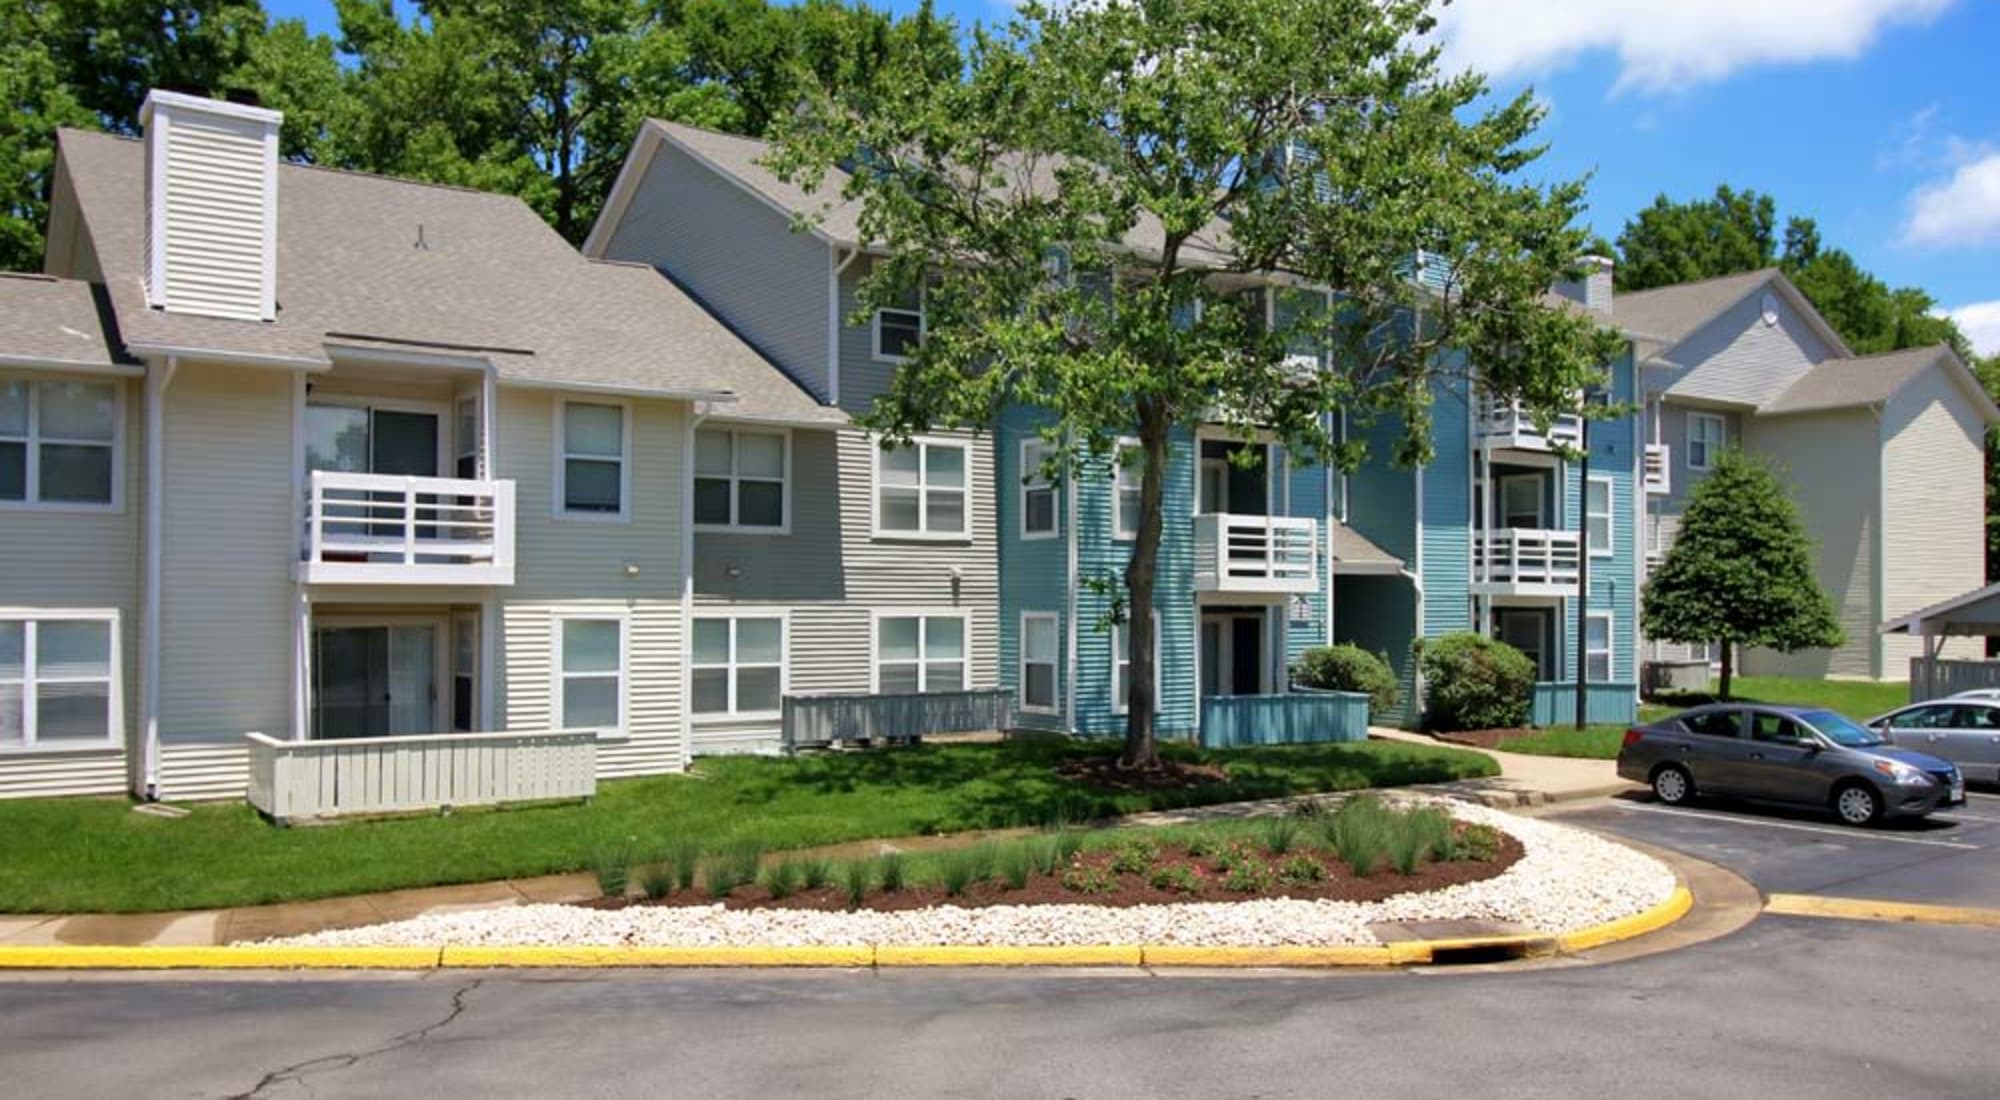 Exterior view of the apartments at Runaway Bay Apartments in Virginia Beach, Virginia